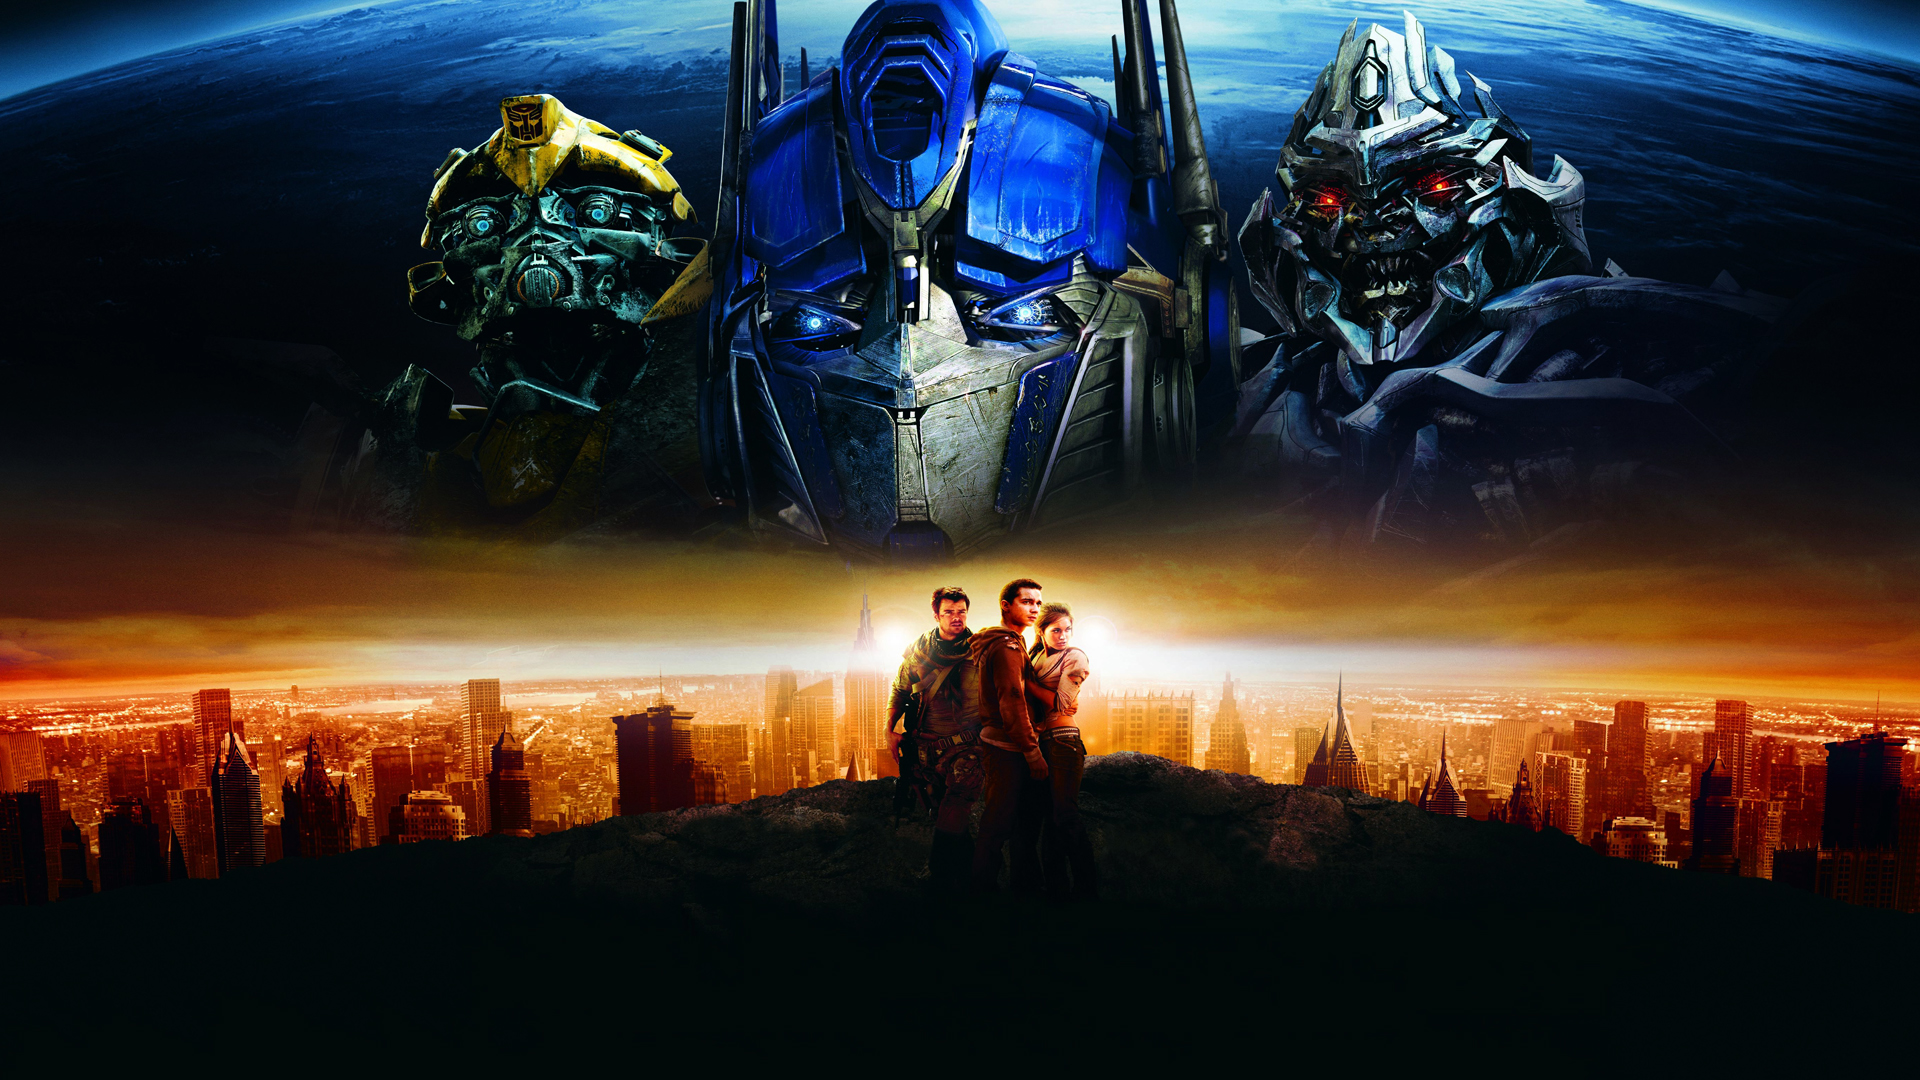 Transformers Full Movie 2007 Free